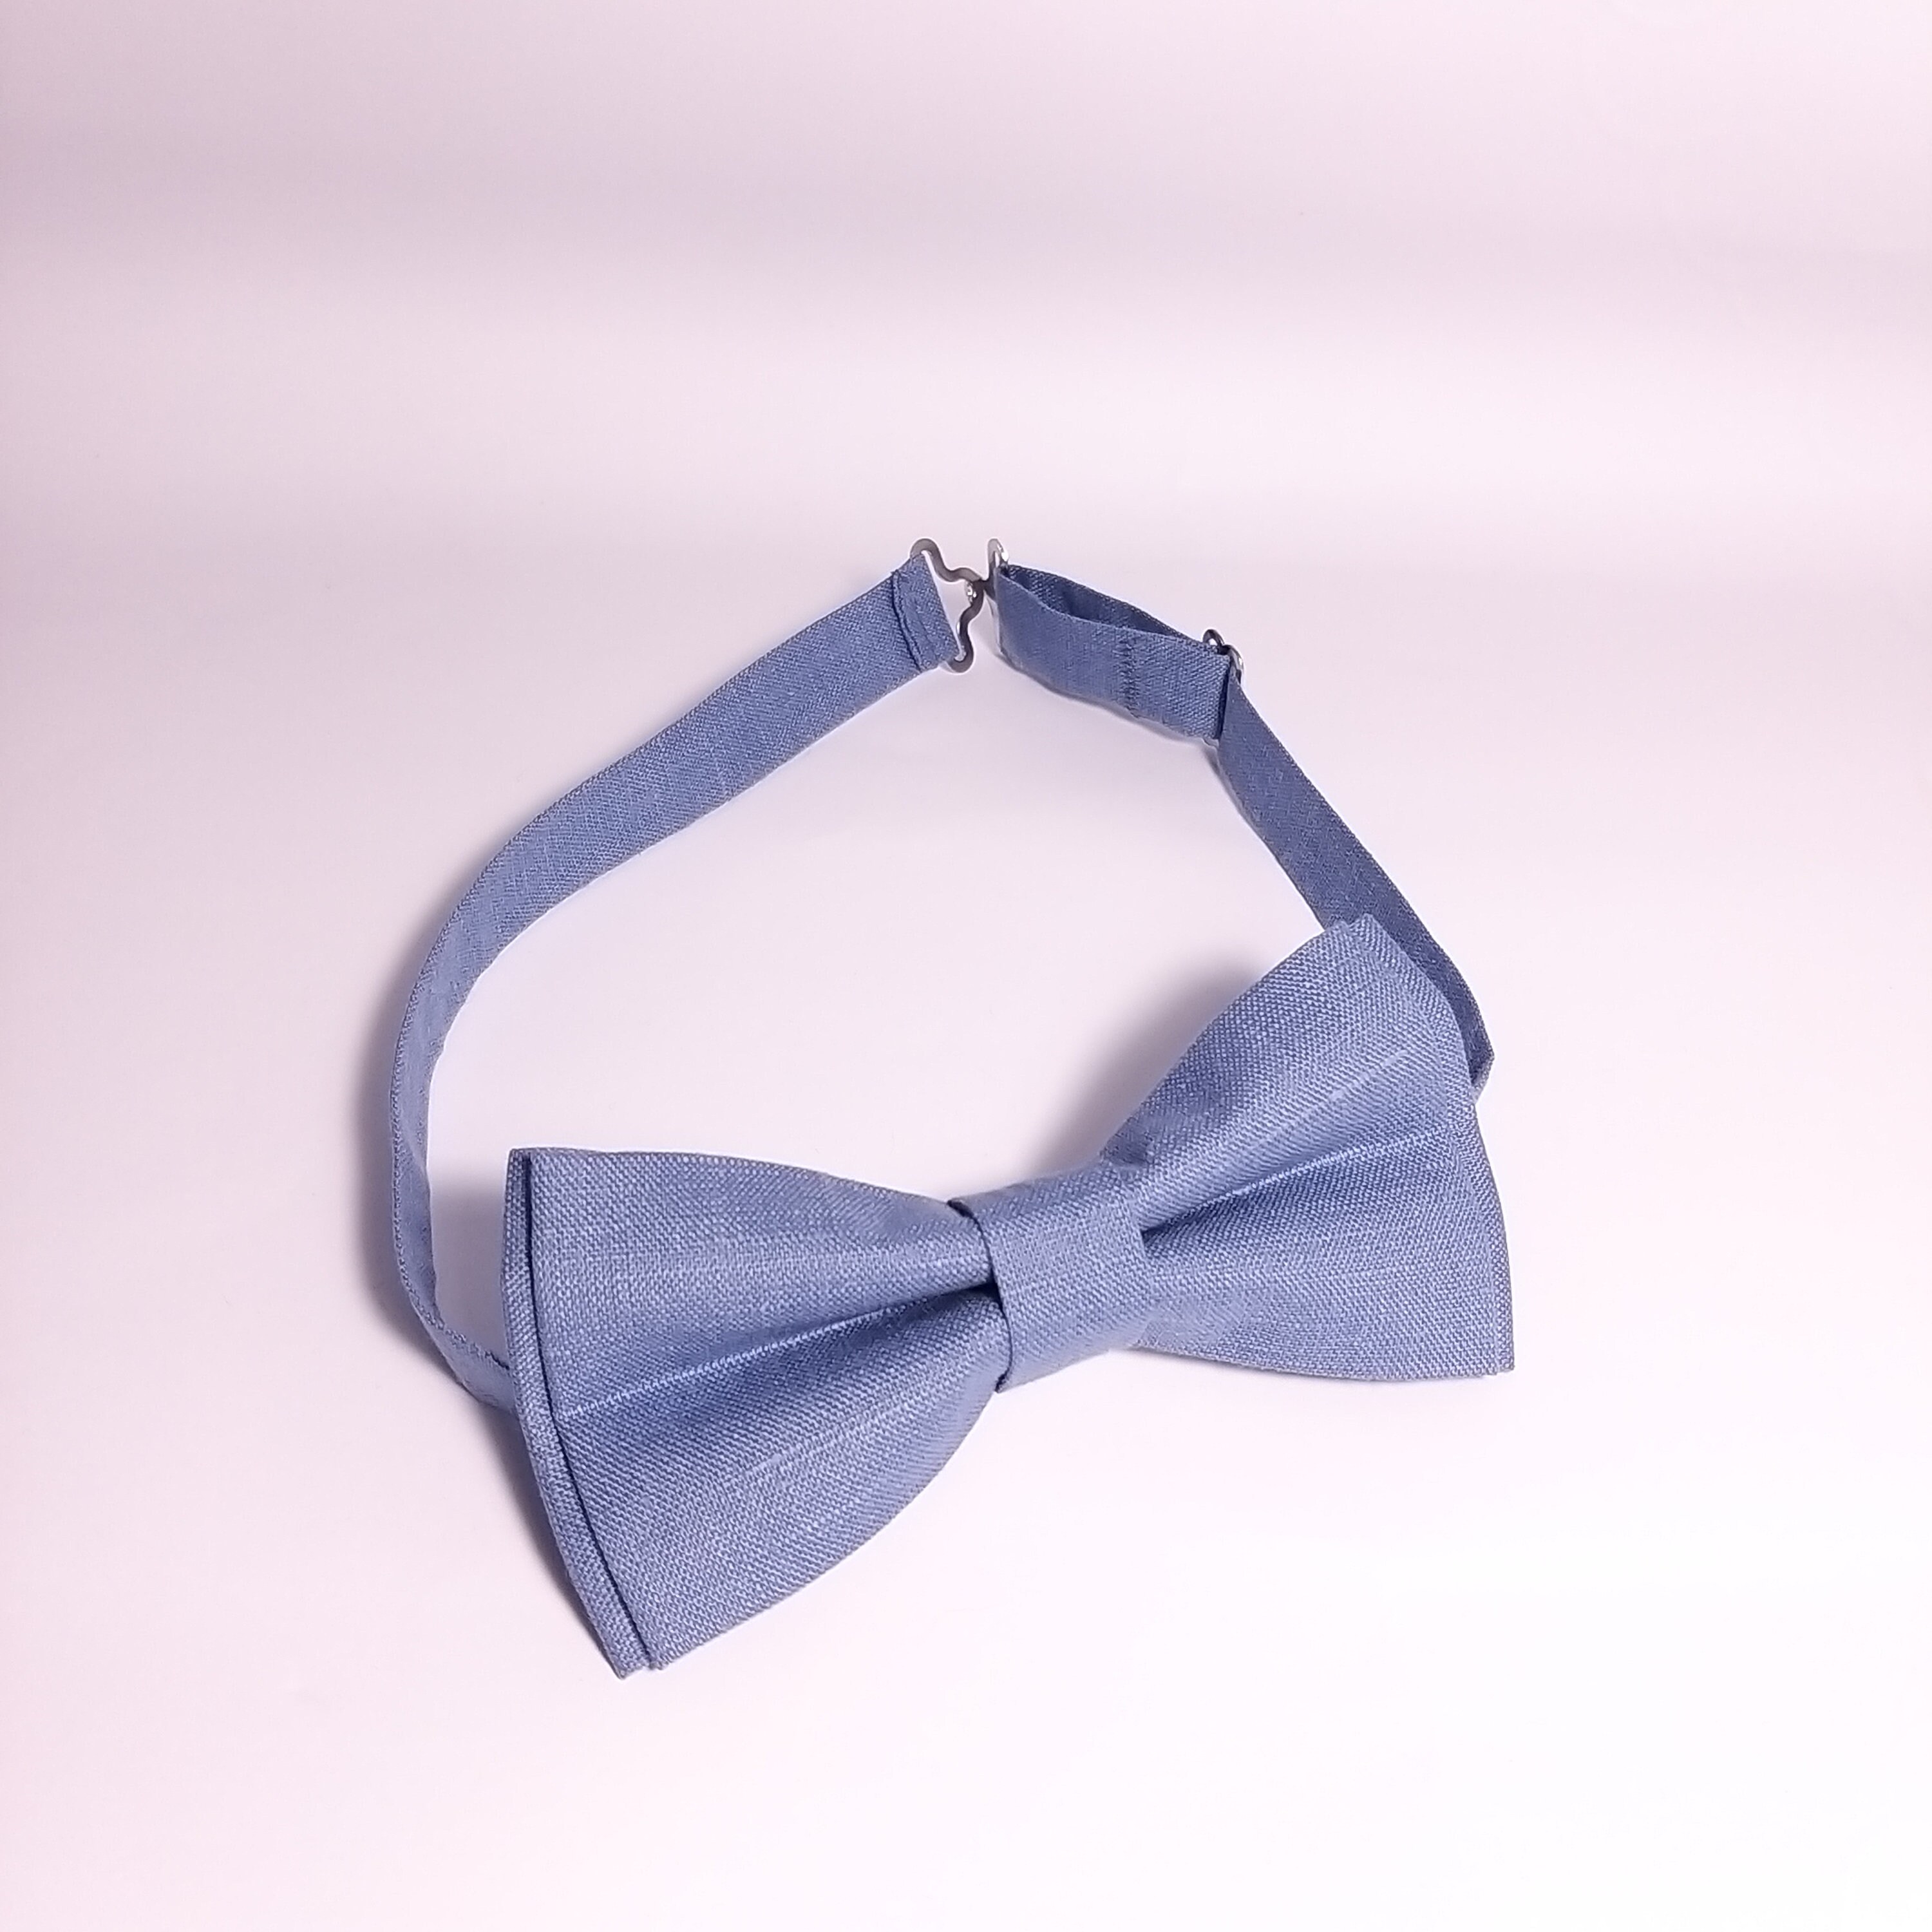 DUSTY BLUE bow tie LIGHT shade wedding 2021 linen bowtie | Etsy